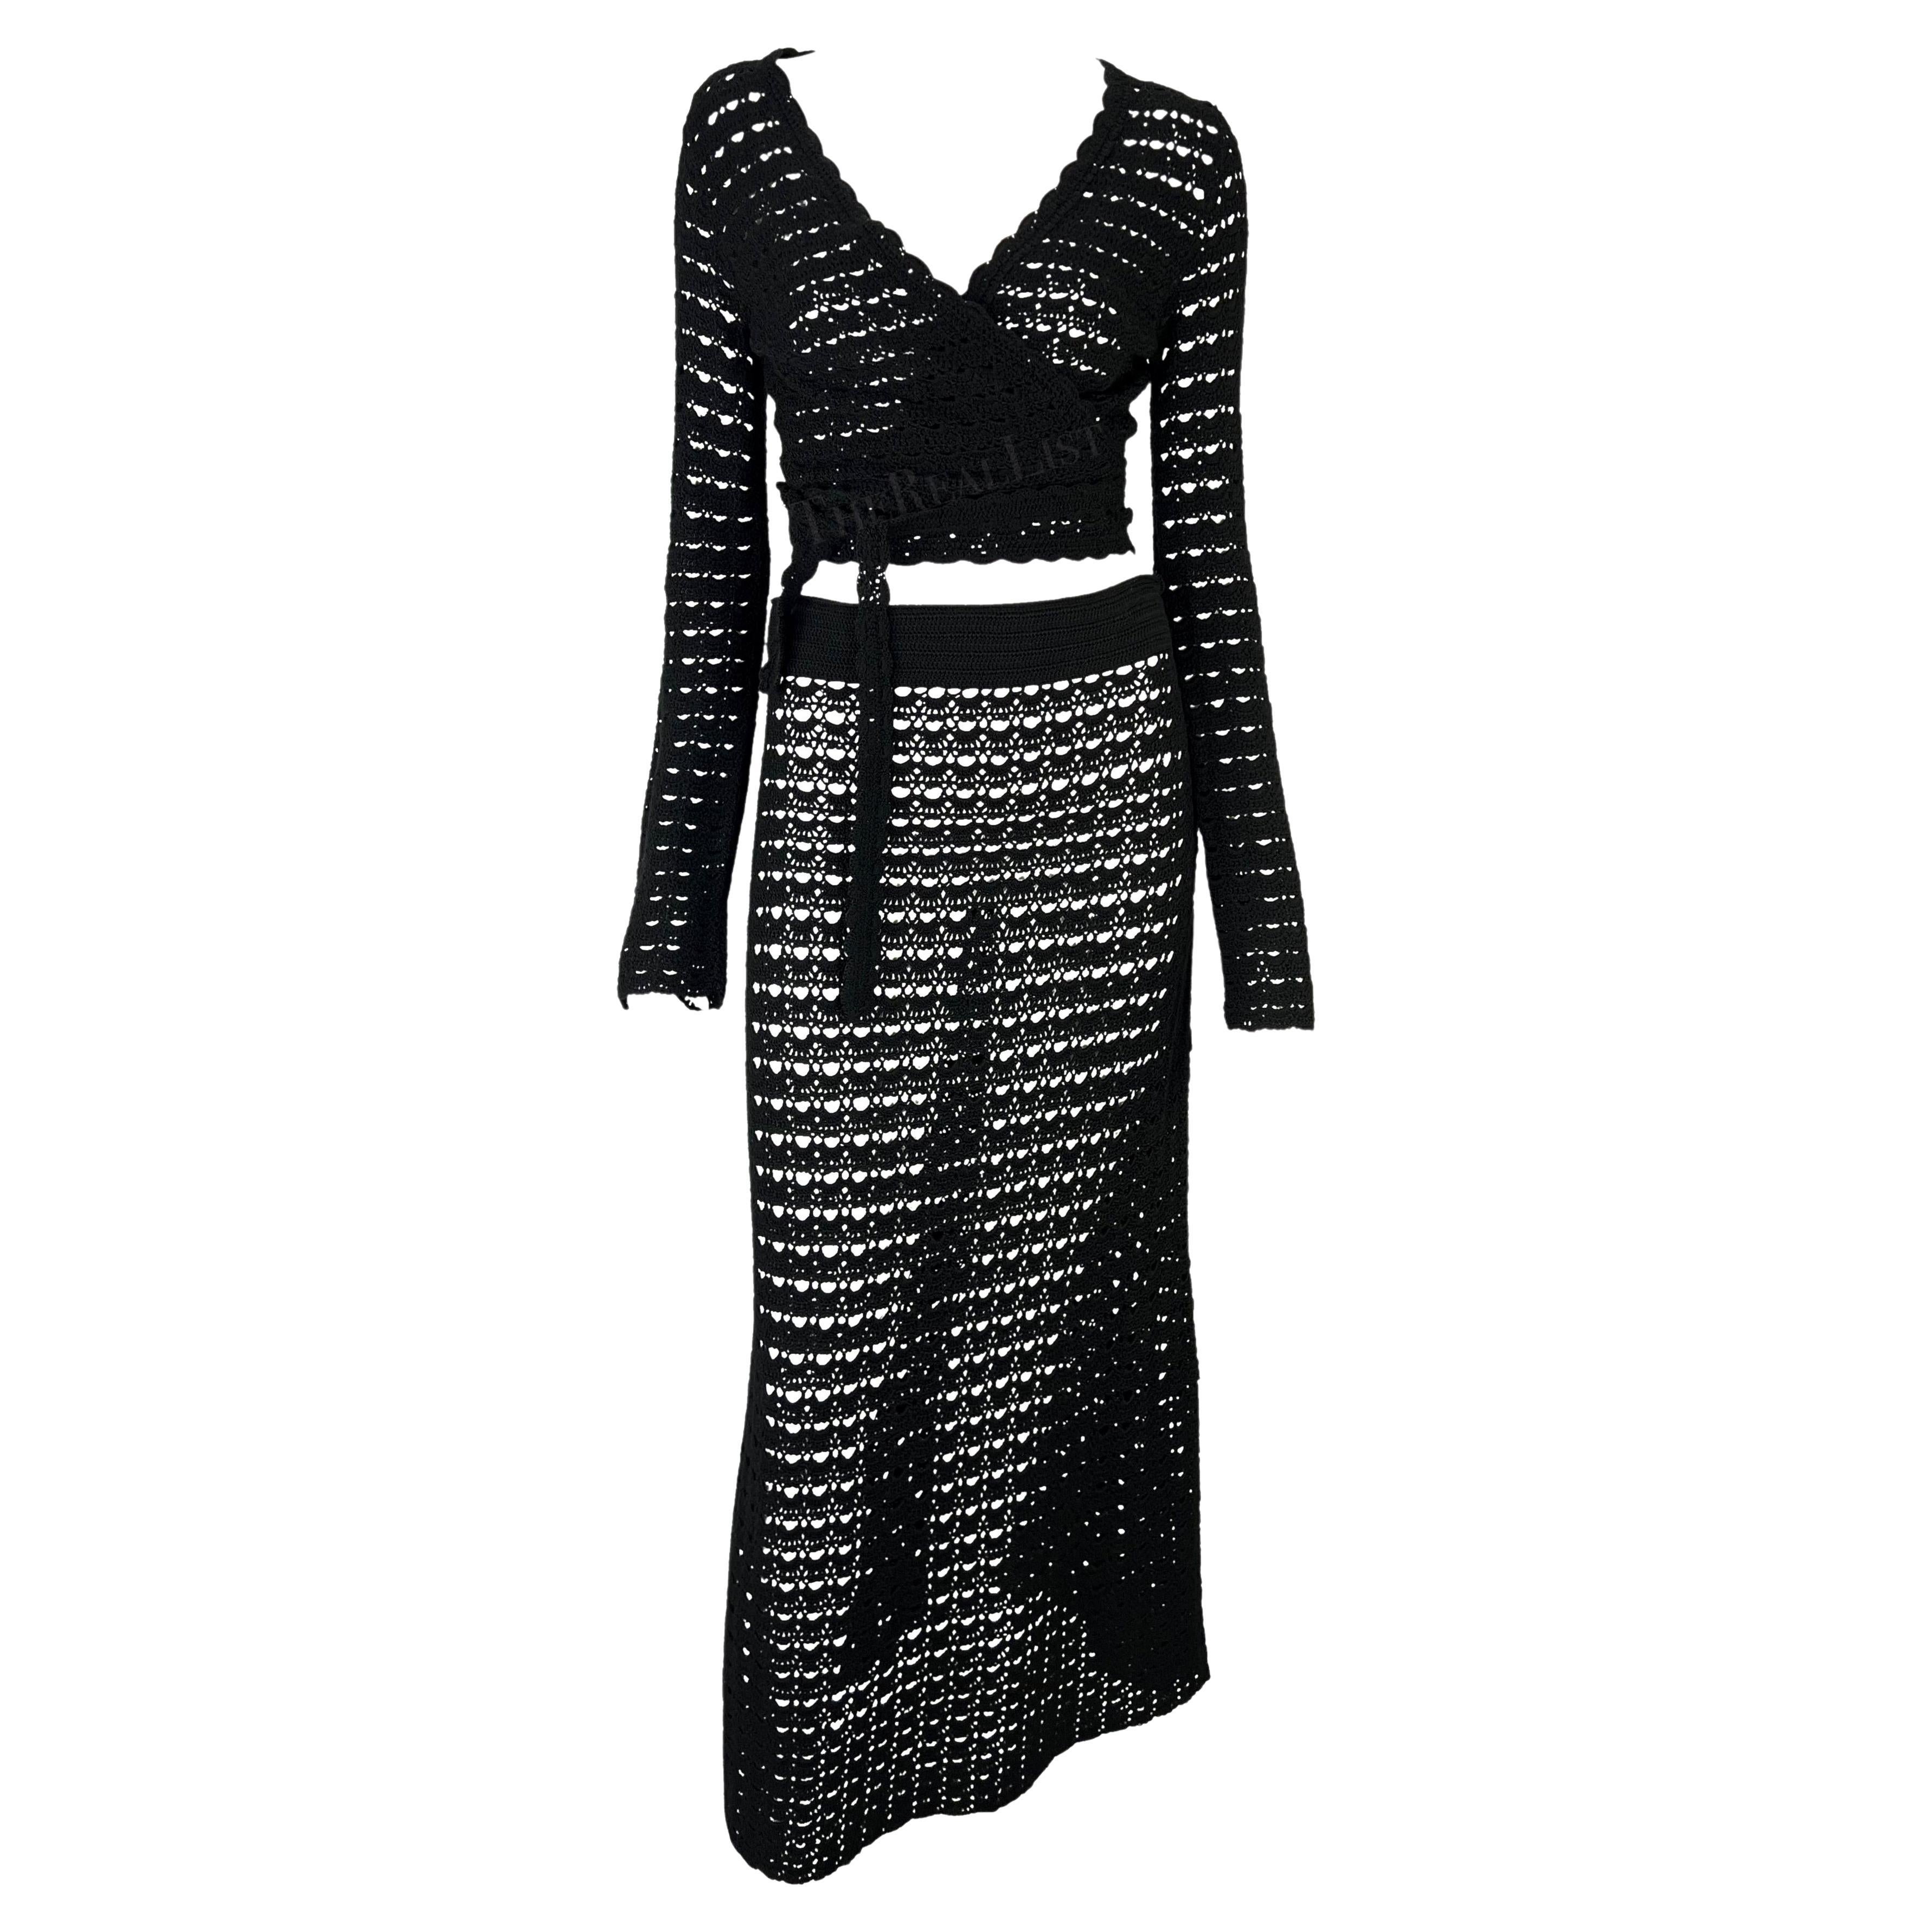 S/S 1997 Dolce & Gabbana Black Knit Crochet Maxi Skirt Wrap Top Skirt Set For Sale